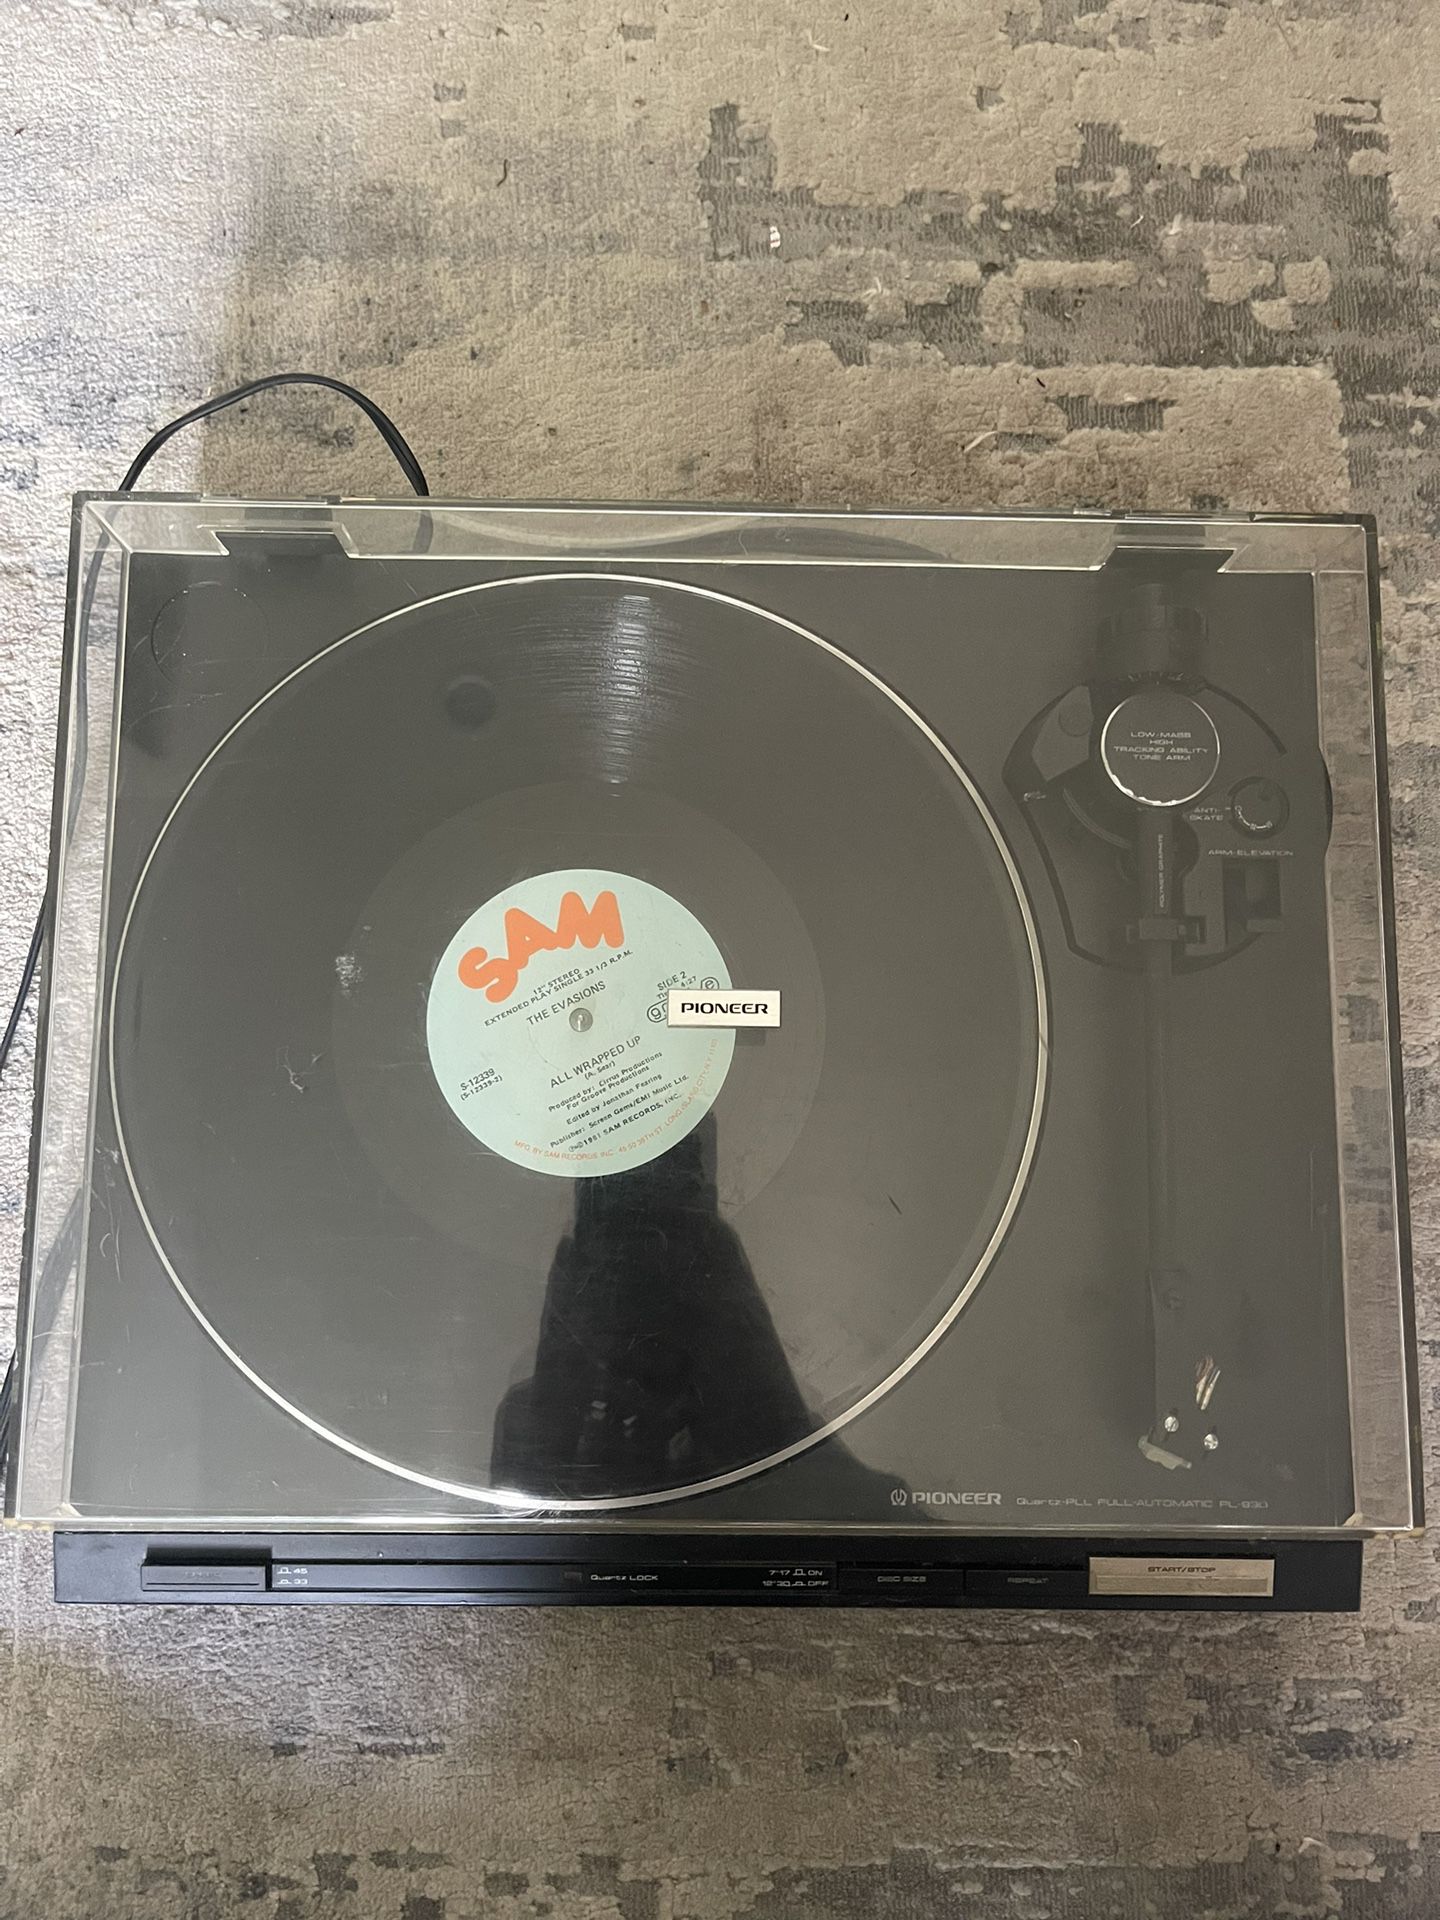 Pioneer PL-930 Vinyl Record Player